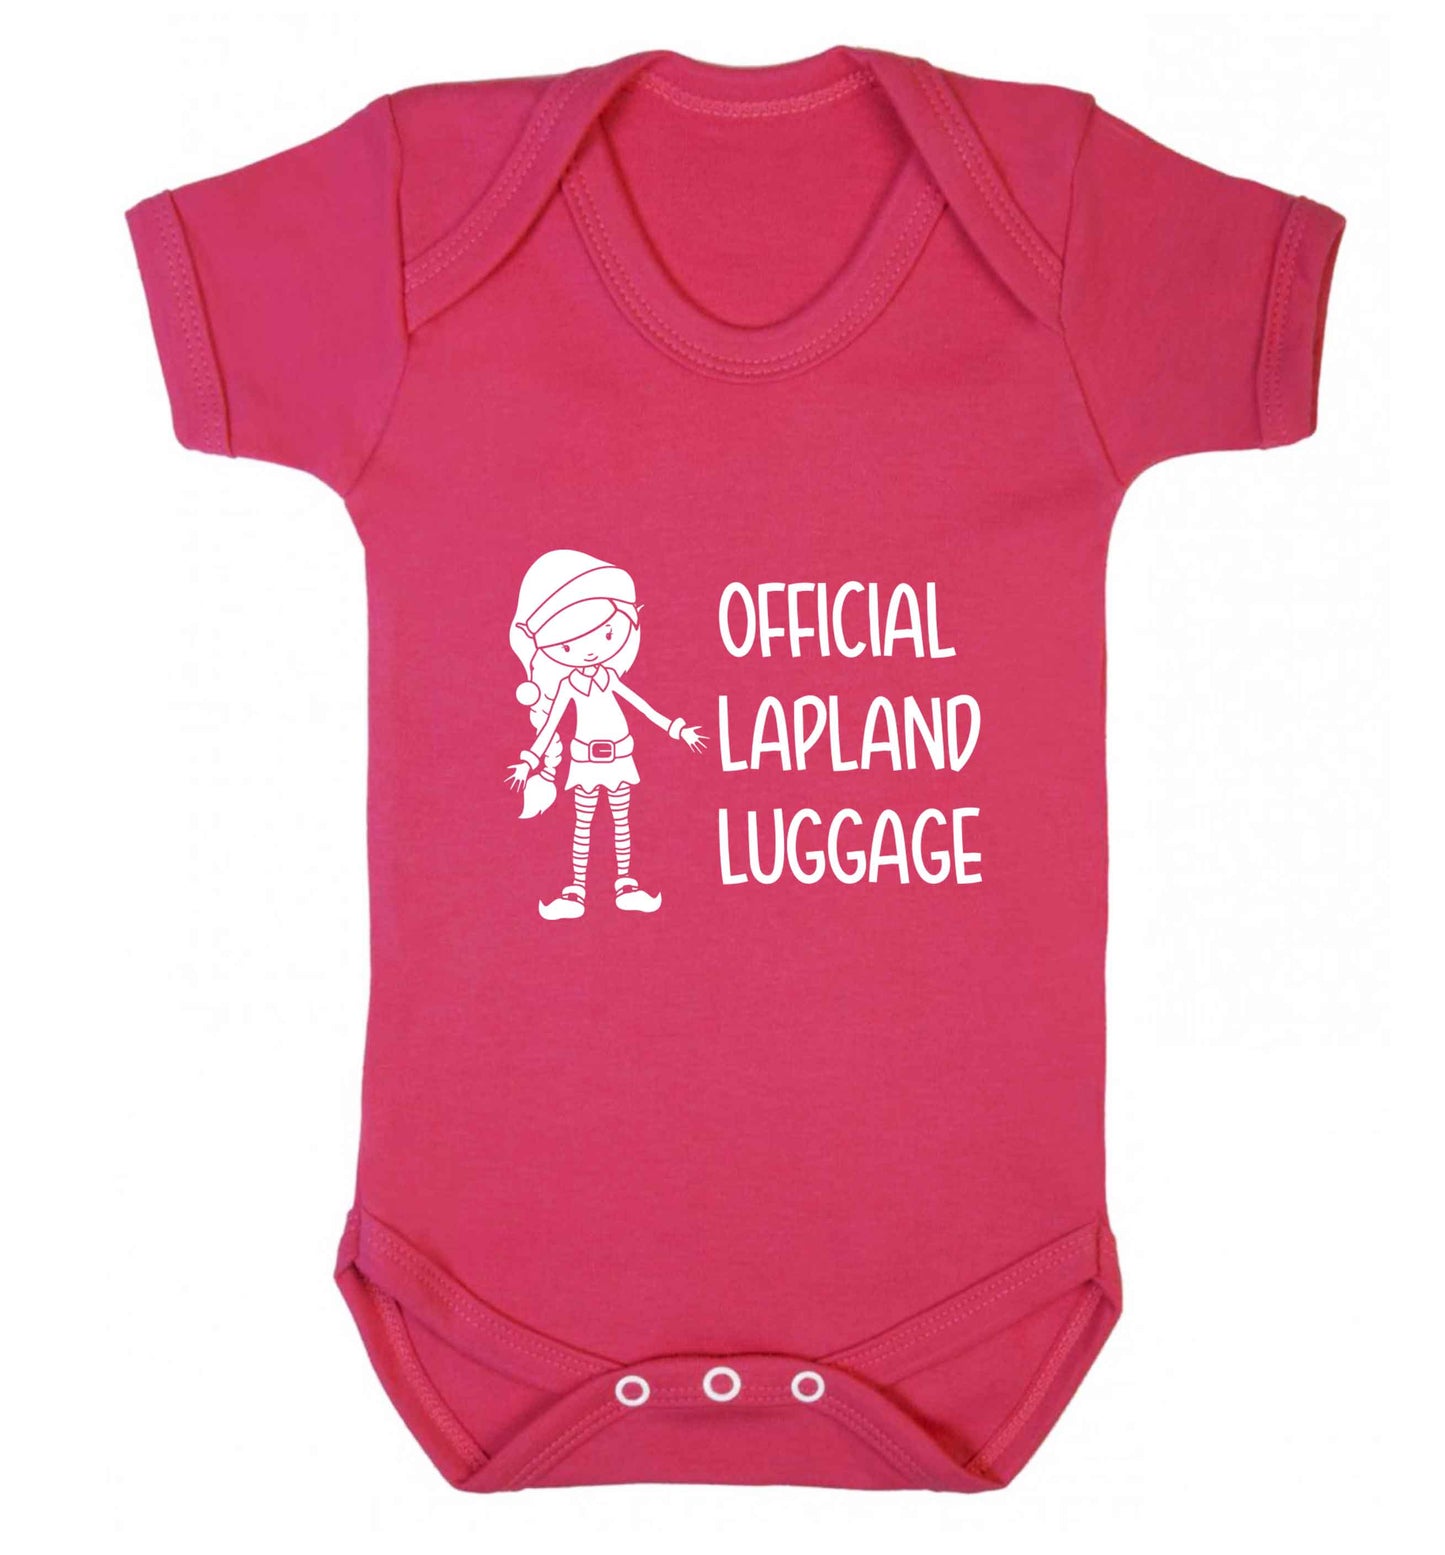 Official lapland luggage - Elf snowflake baby vest dark pink 18-24 months